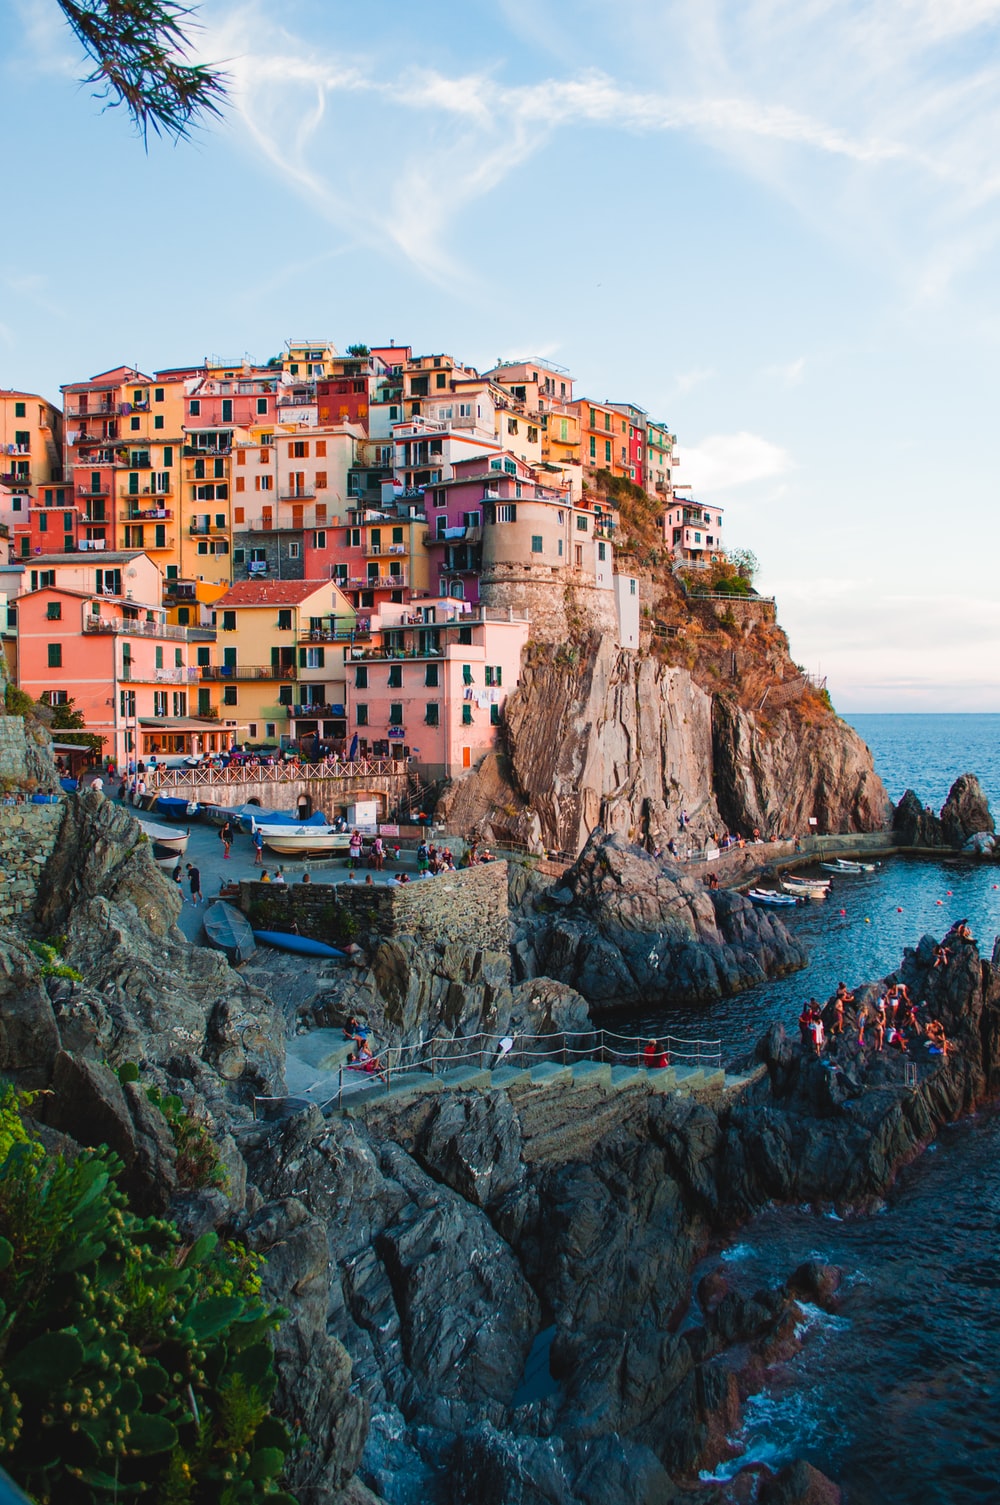 Capri, Italy Picture. Download Free Image